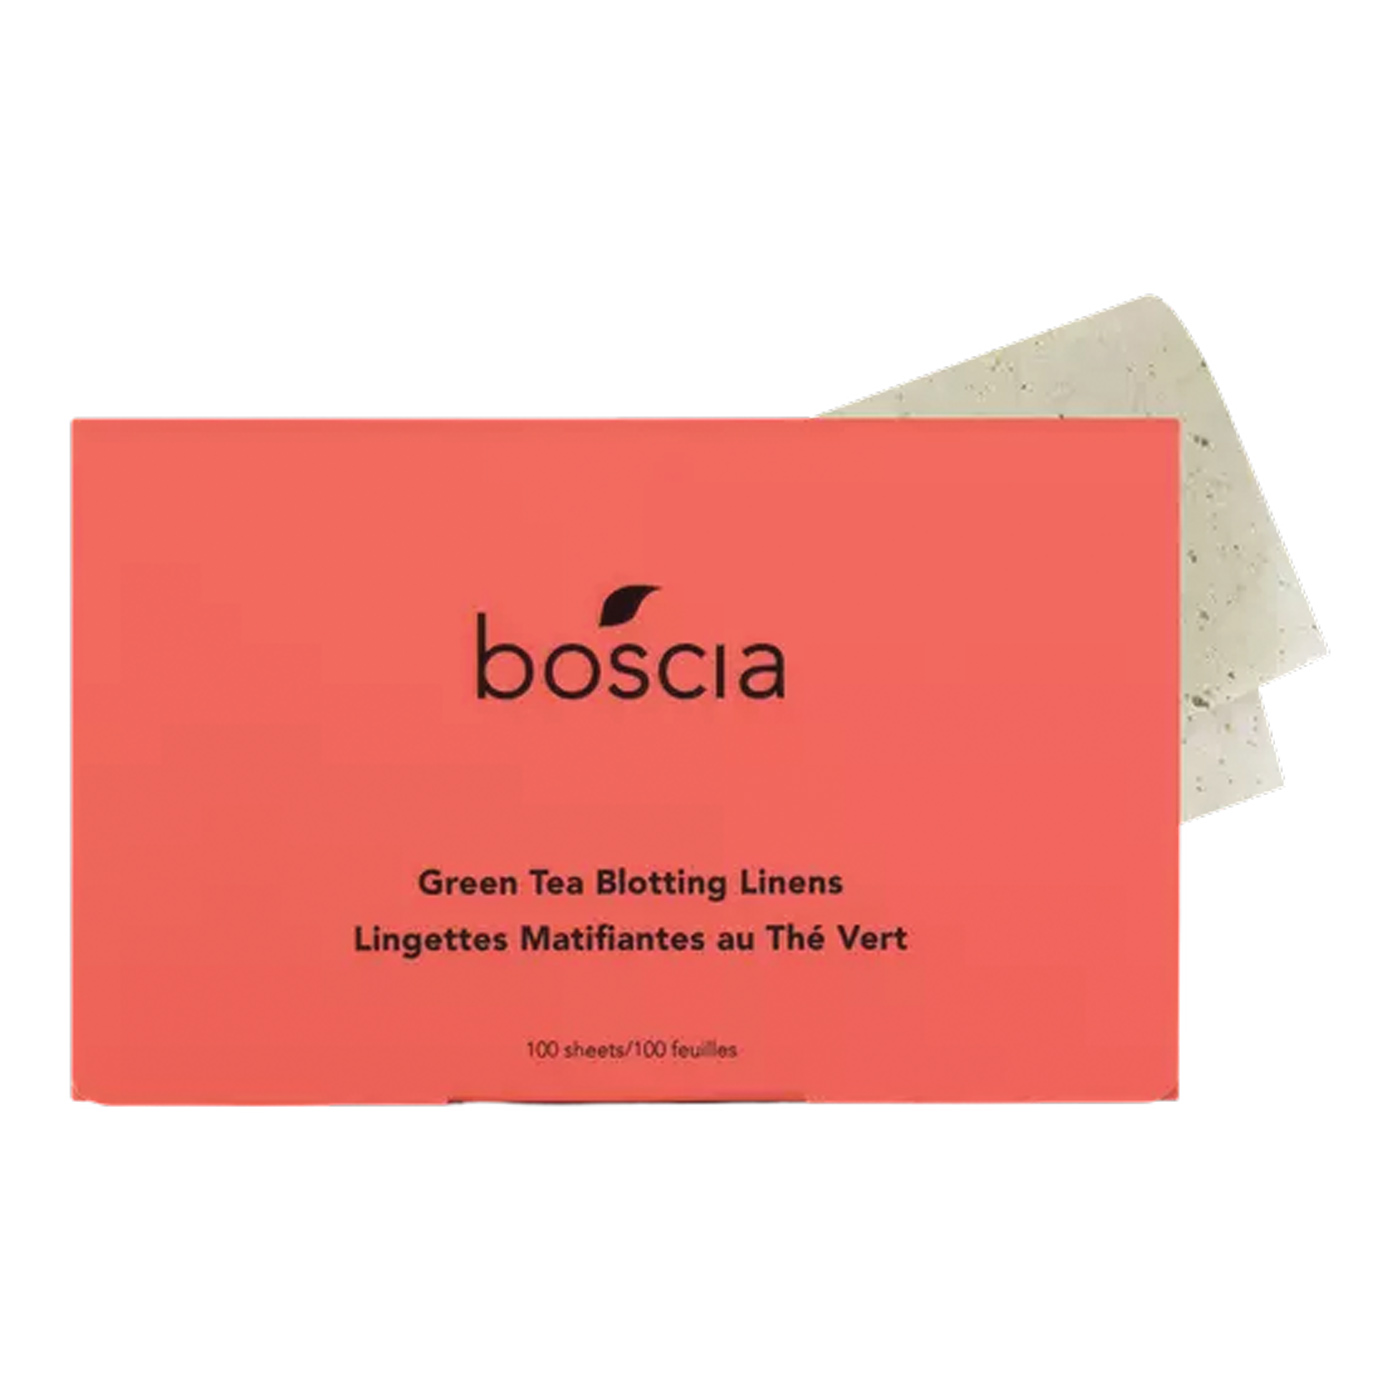 Green Tea Blotting Linens By Boscia Sephora.com